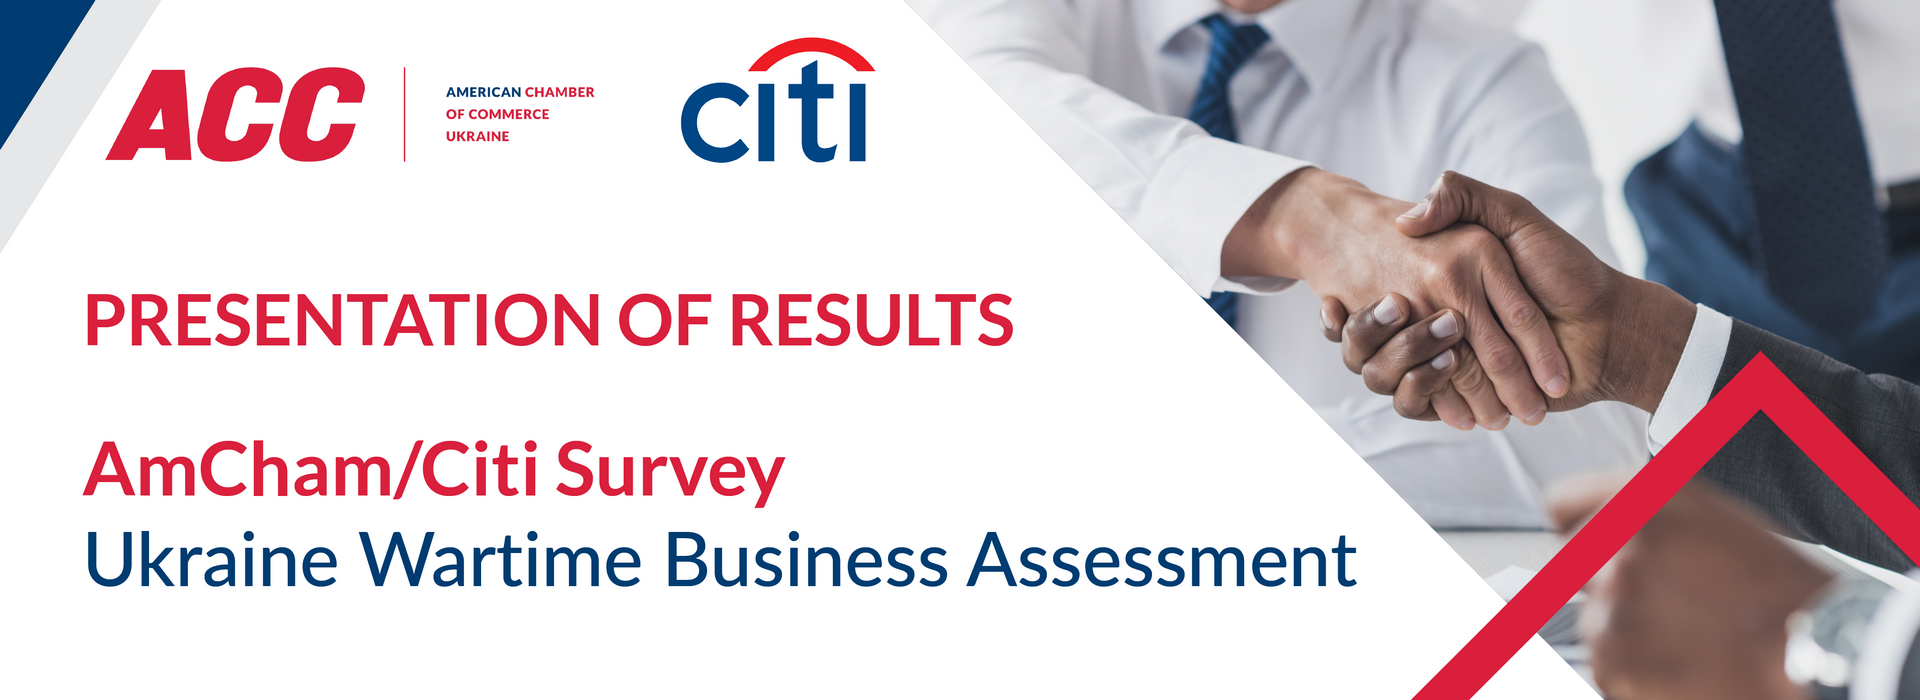 AmCham/Citi Survey. Ukraine Wartime Business Assessment